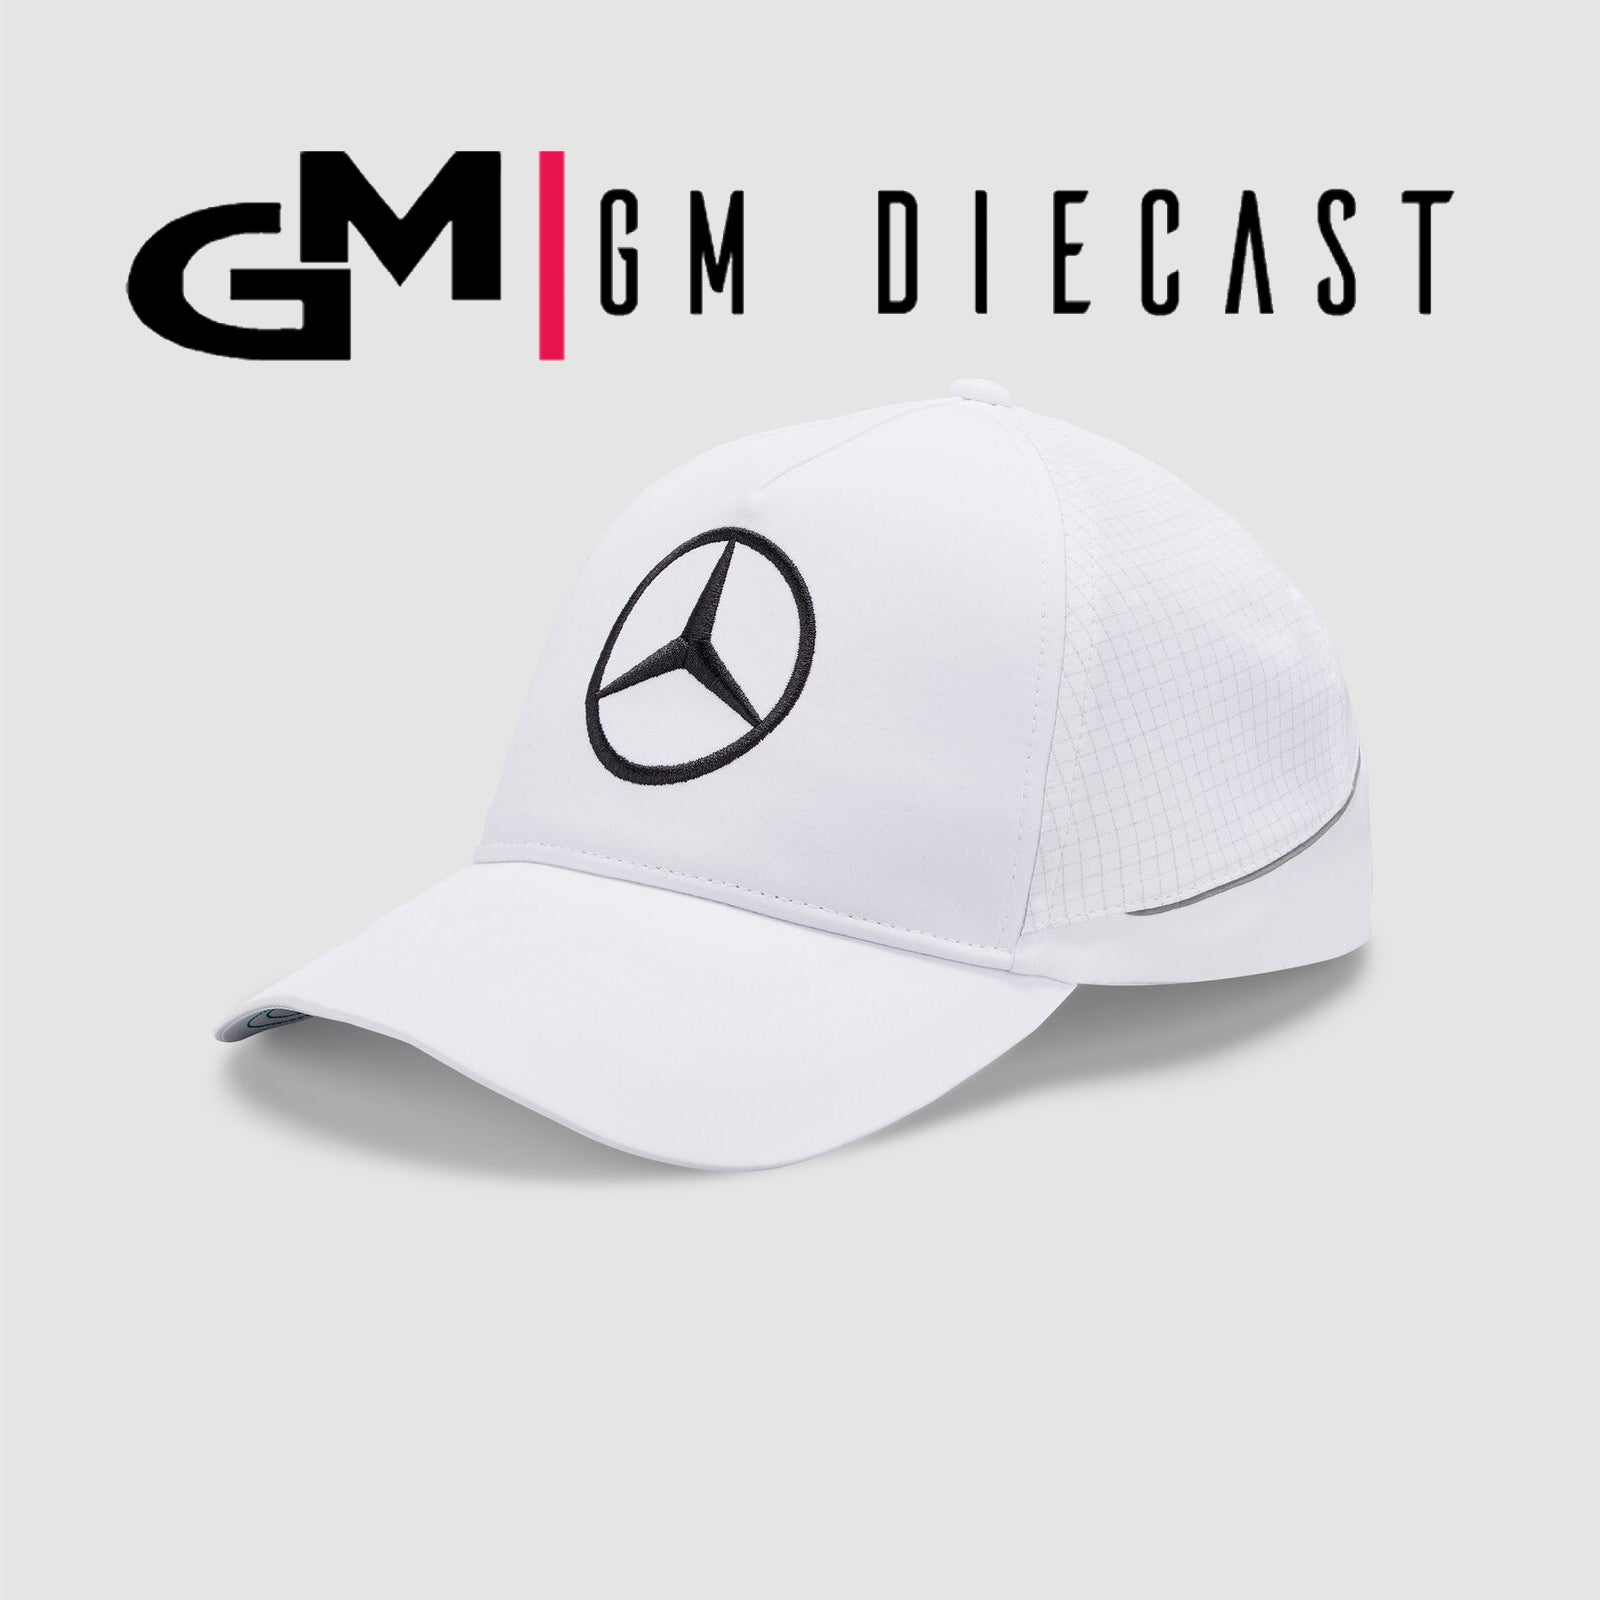 Mercedes-AMG F1 Team Cap